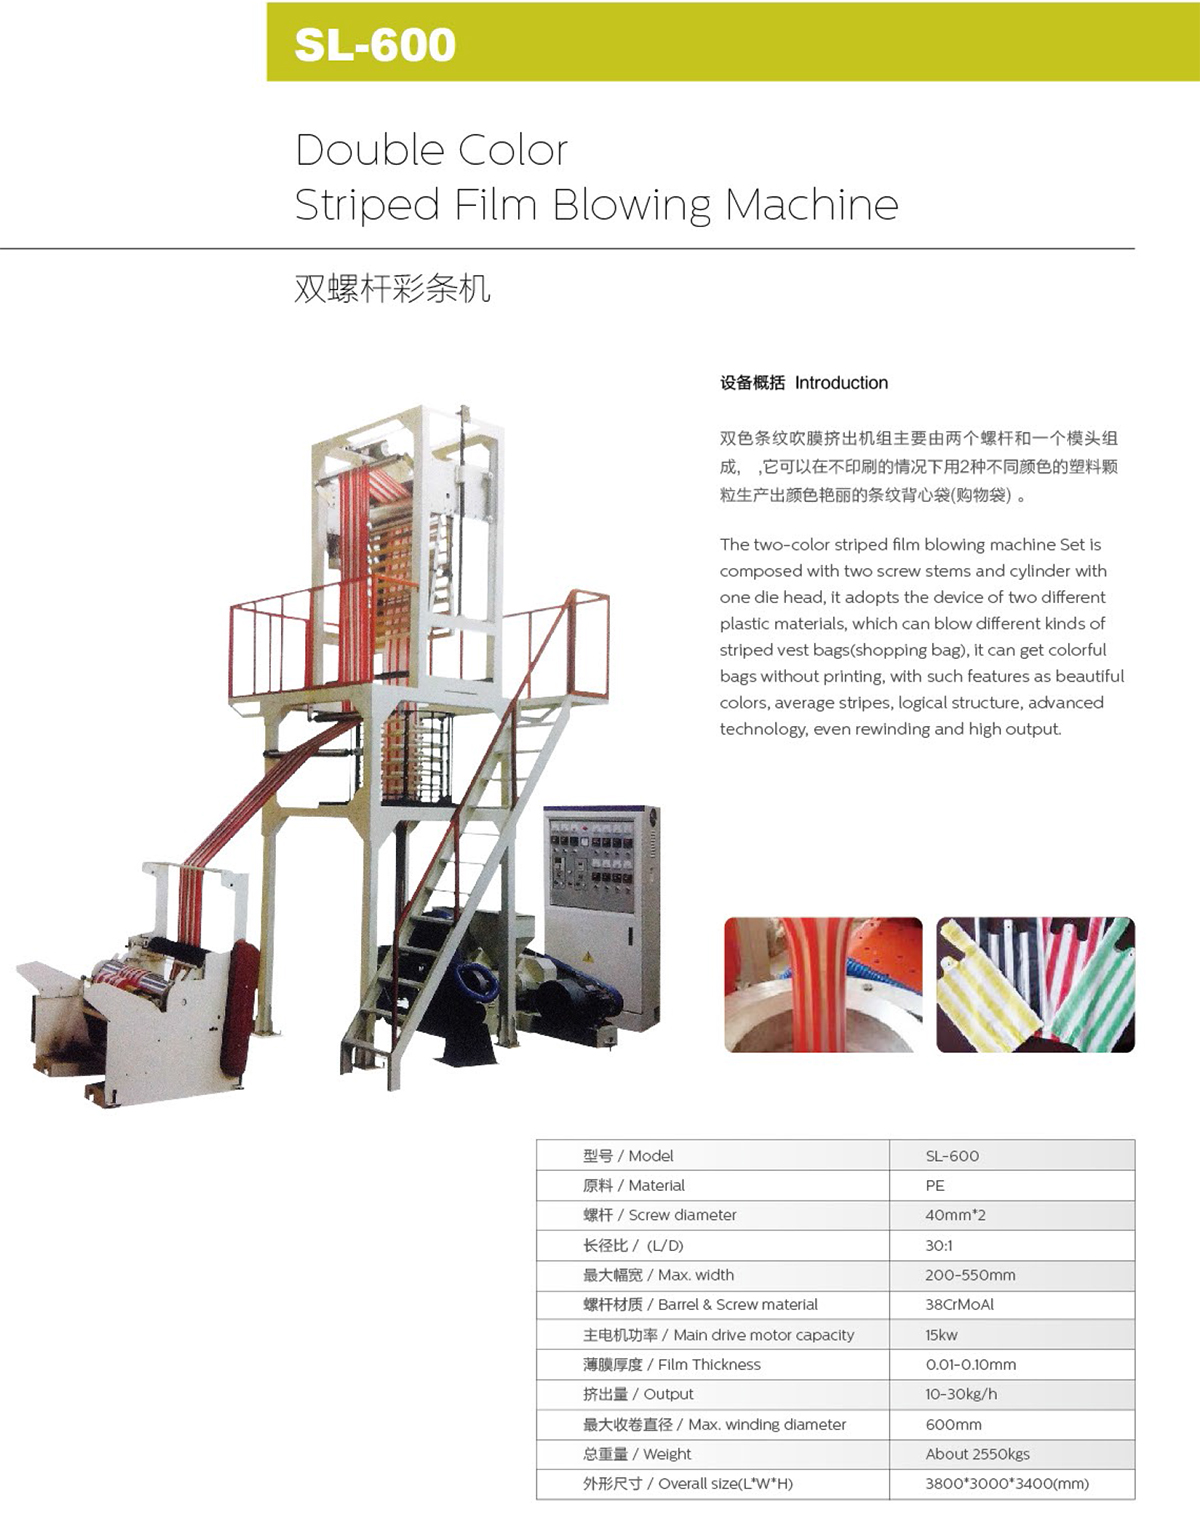 SL-600 Double Color Striped Film Blowing Machine